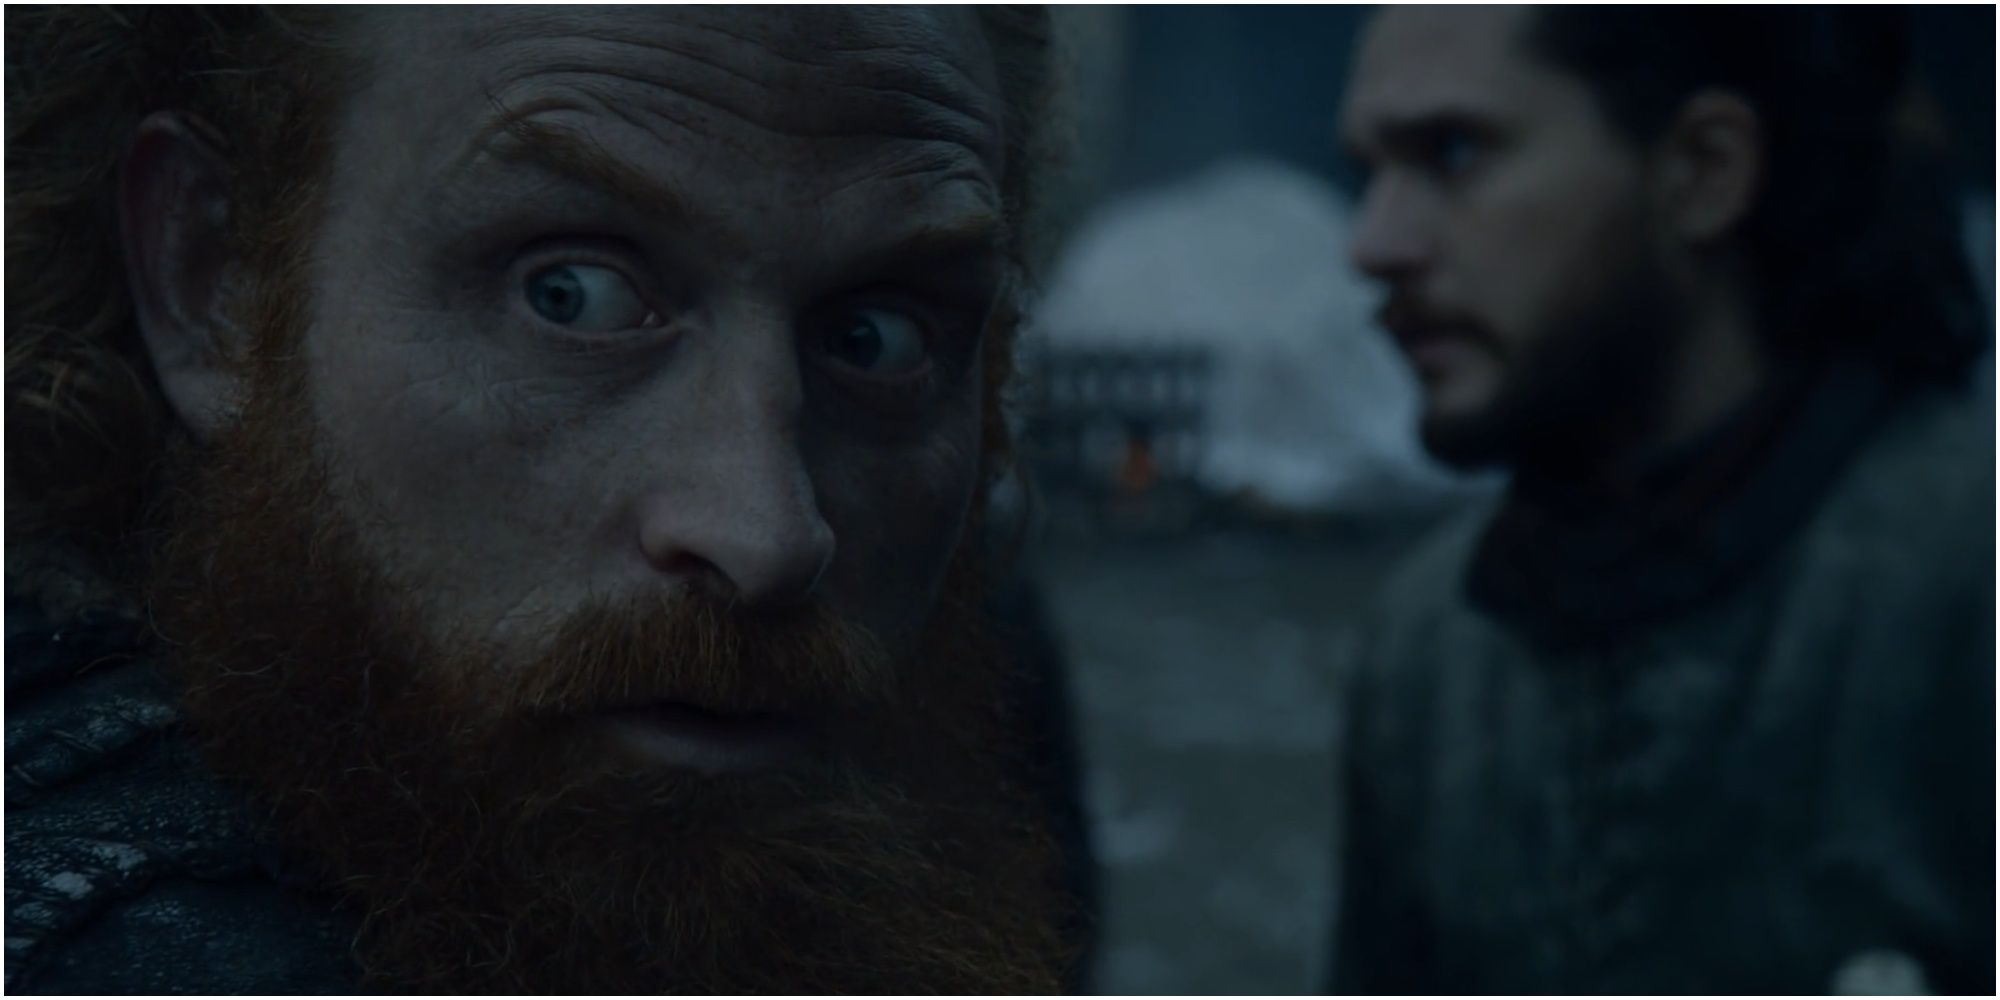 Tormund Giantsbane and Jon Snow in Game of Thrones.